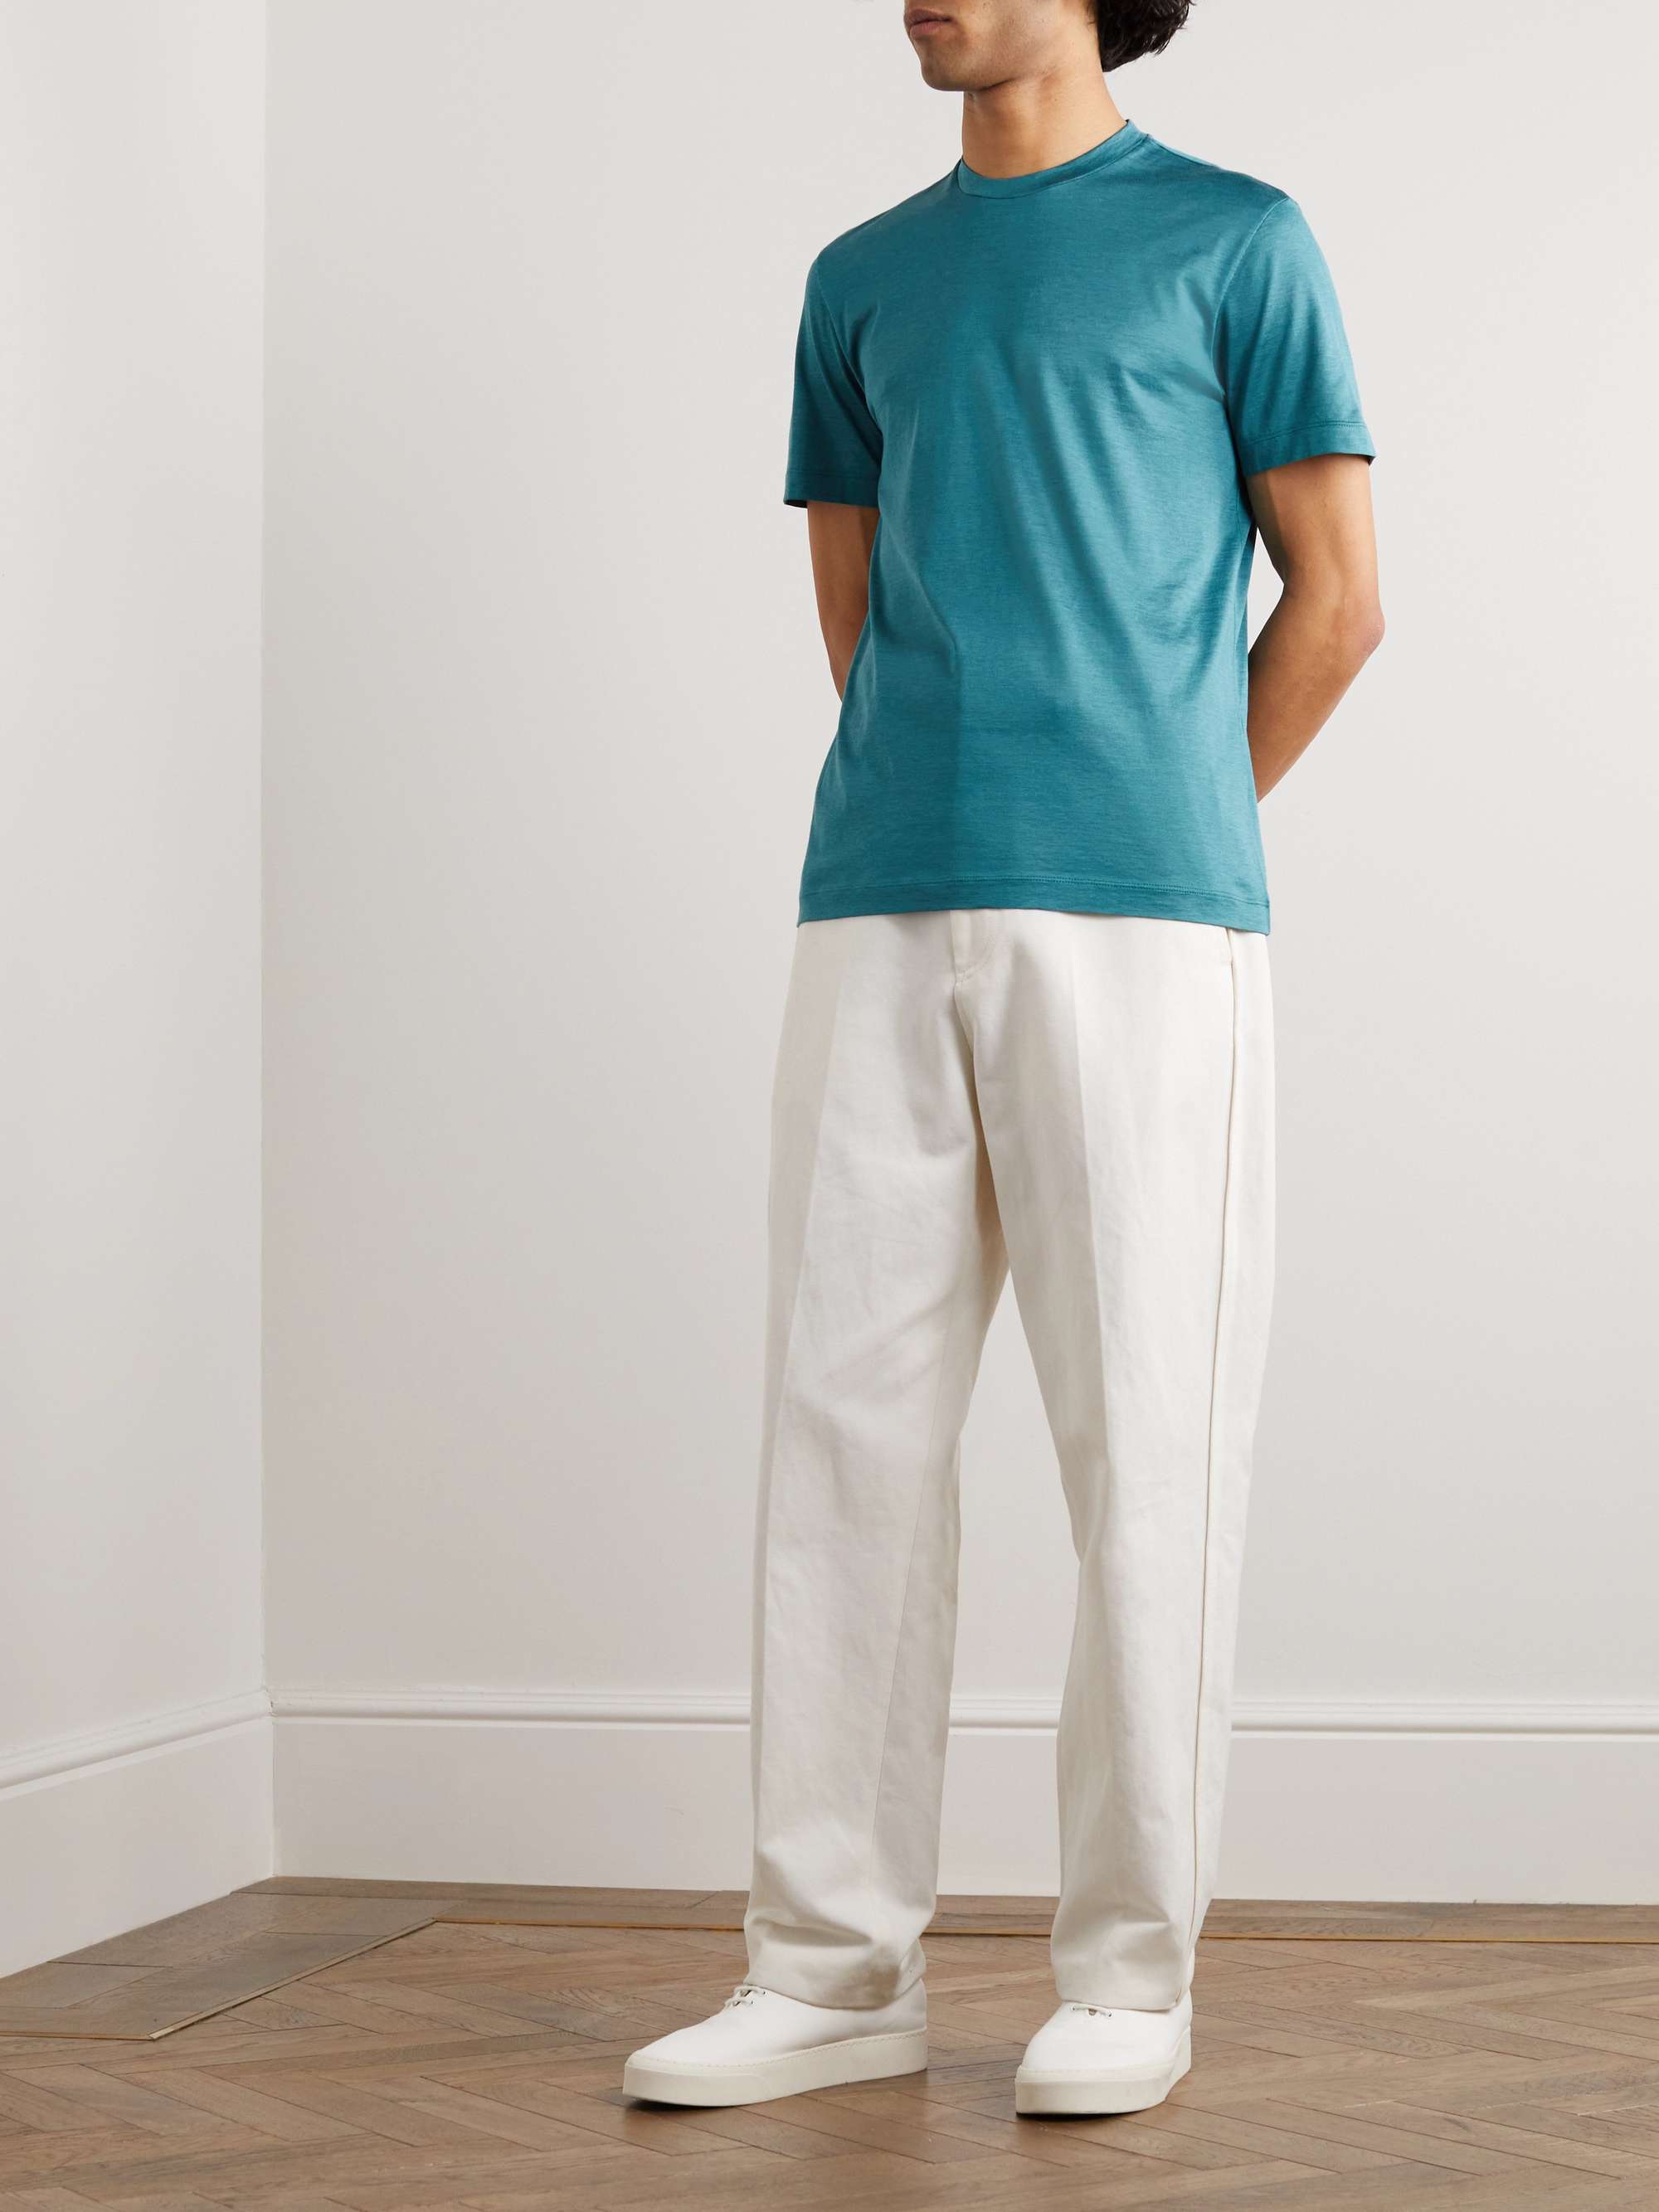 GIORGIO ARMANI Silk and Cotton-Blend Jersey T-Shirt